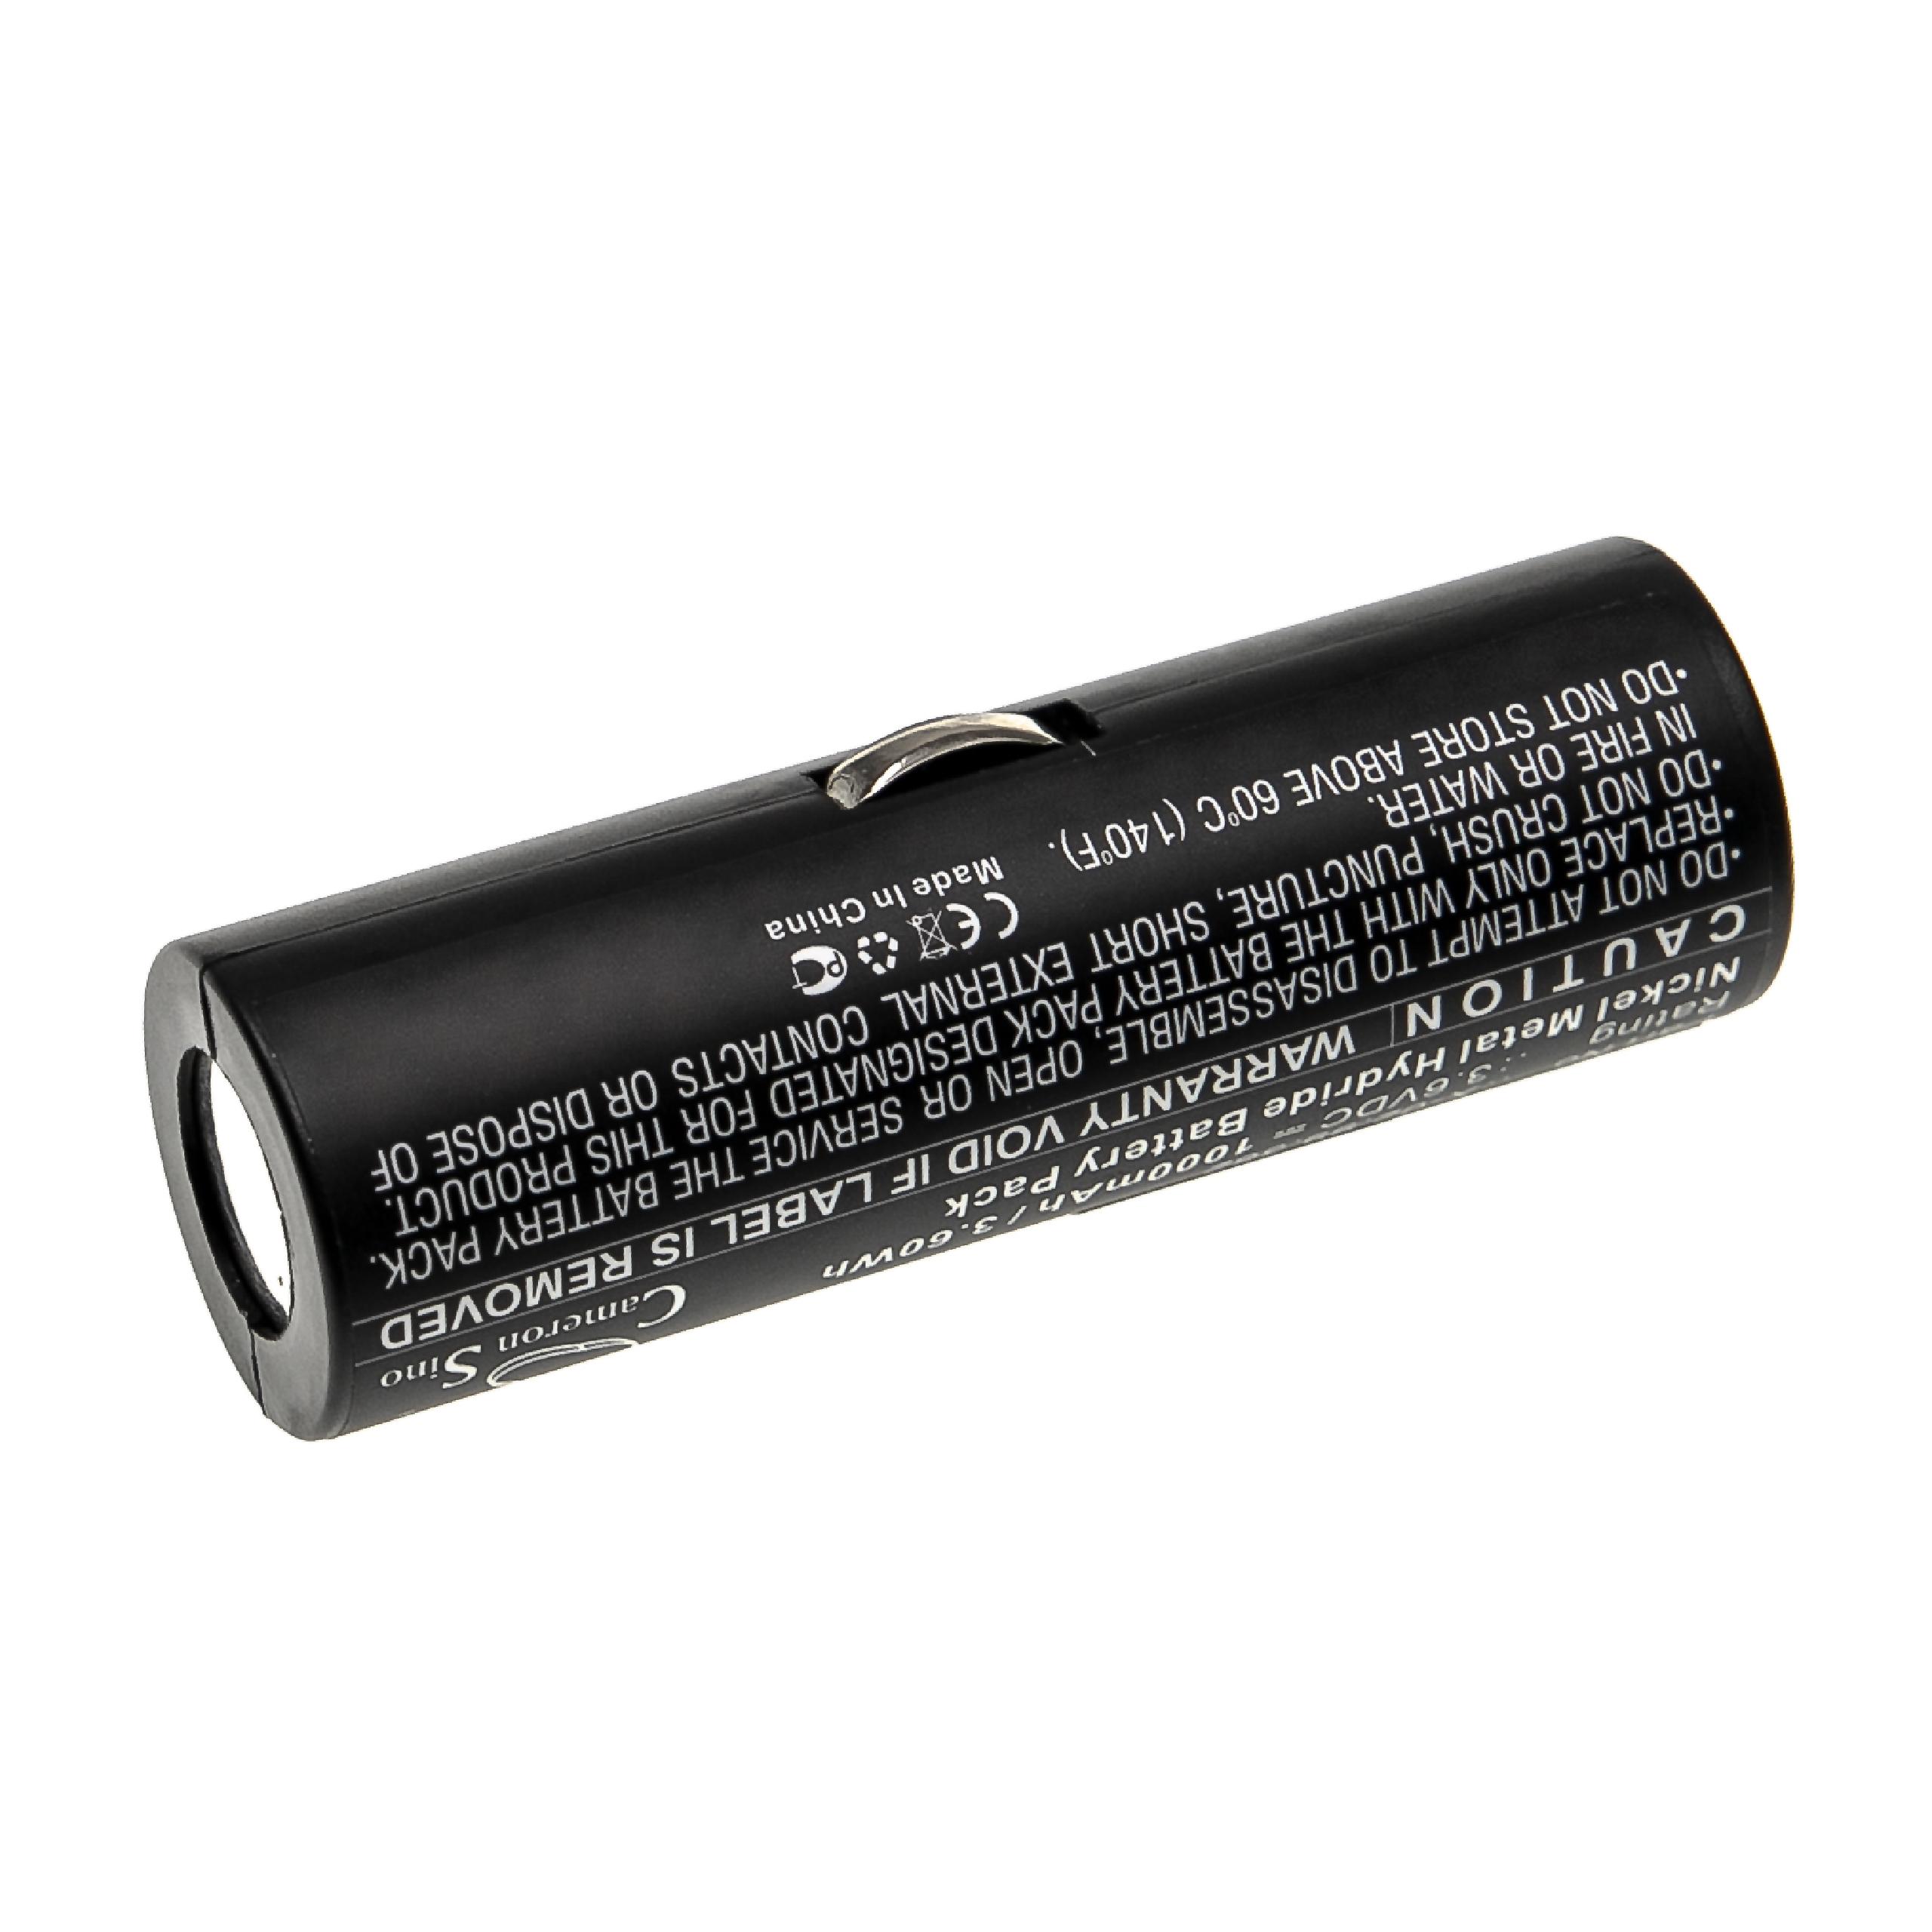 Batería reemplaza Heine X-02.99.382, X-02.99.380, BATT/110904-A1 para tecnología médica - 1000 mAh, 3,6 V